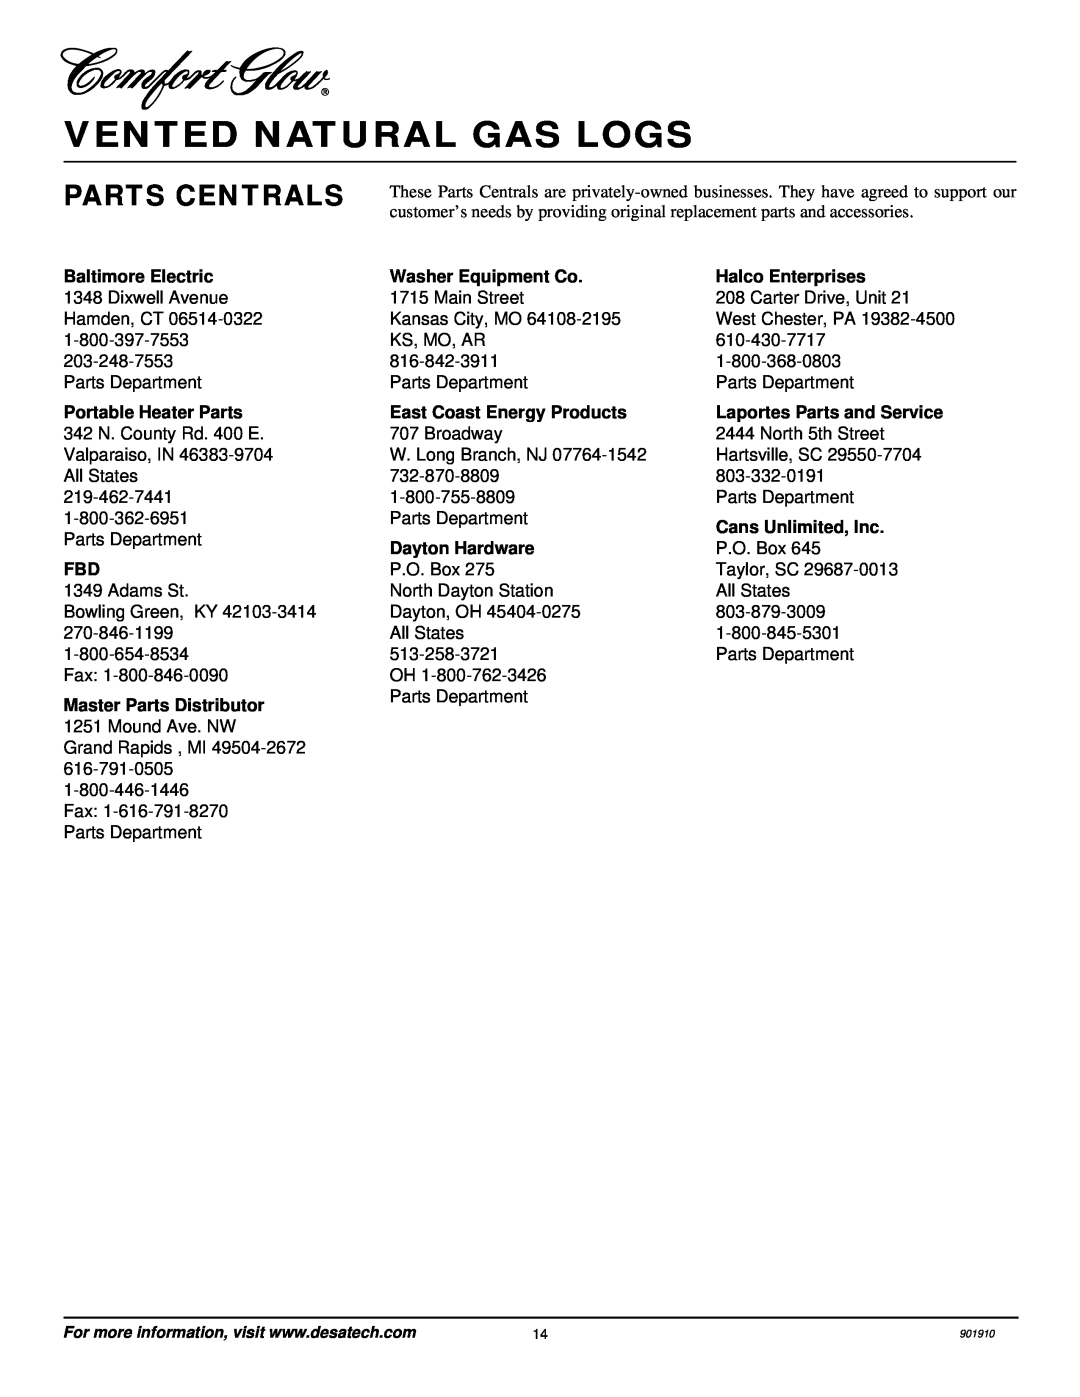 Desa 901910-01A.pdf installation manual Parts Centrals, Vented Natural Gas Logs 